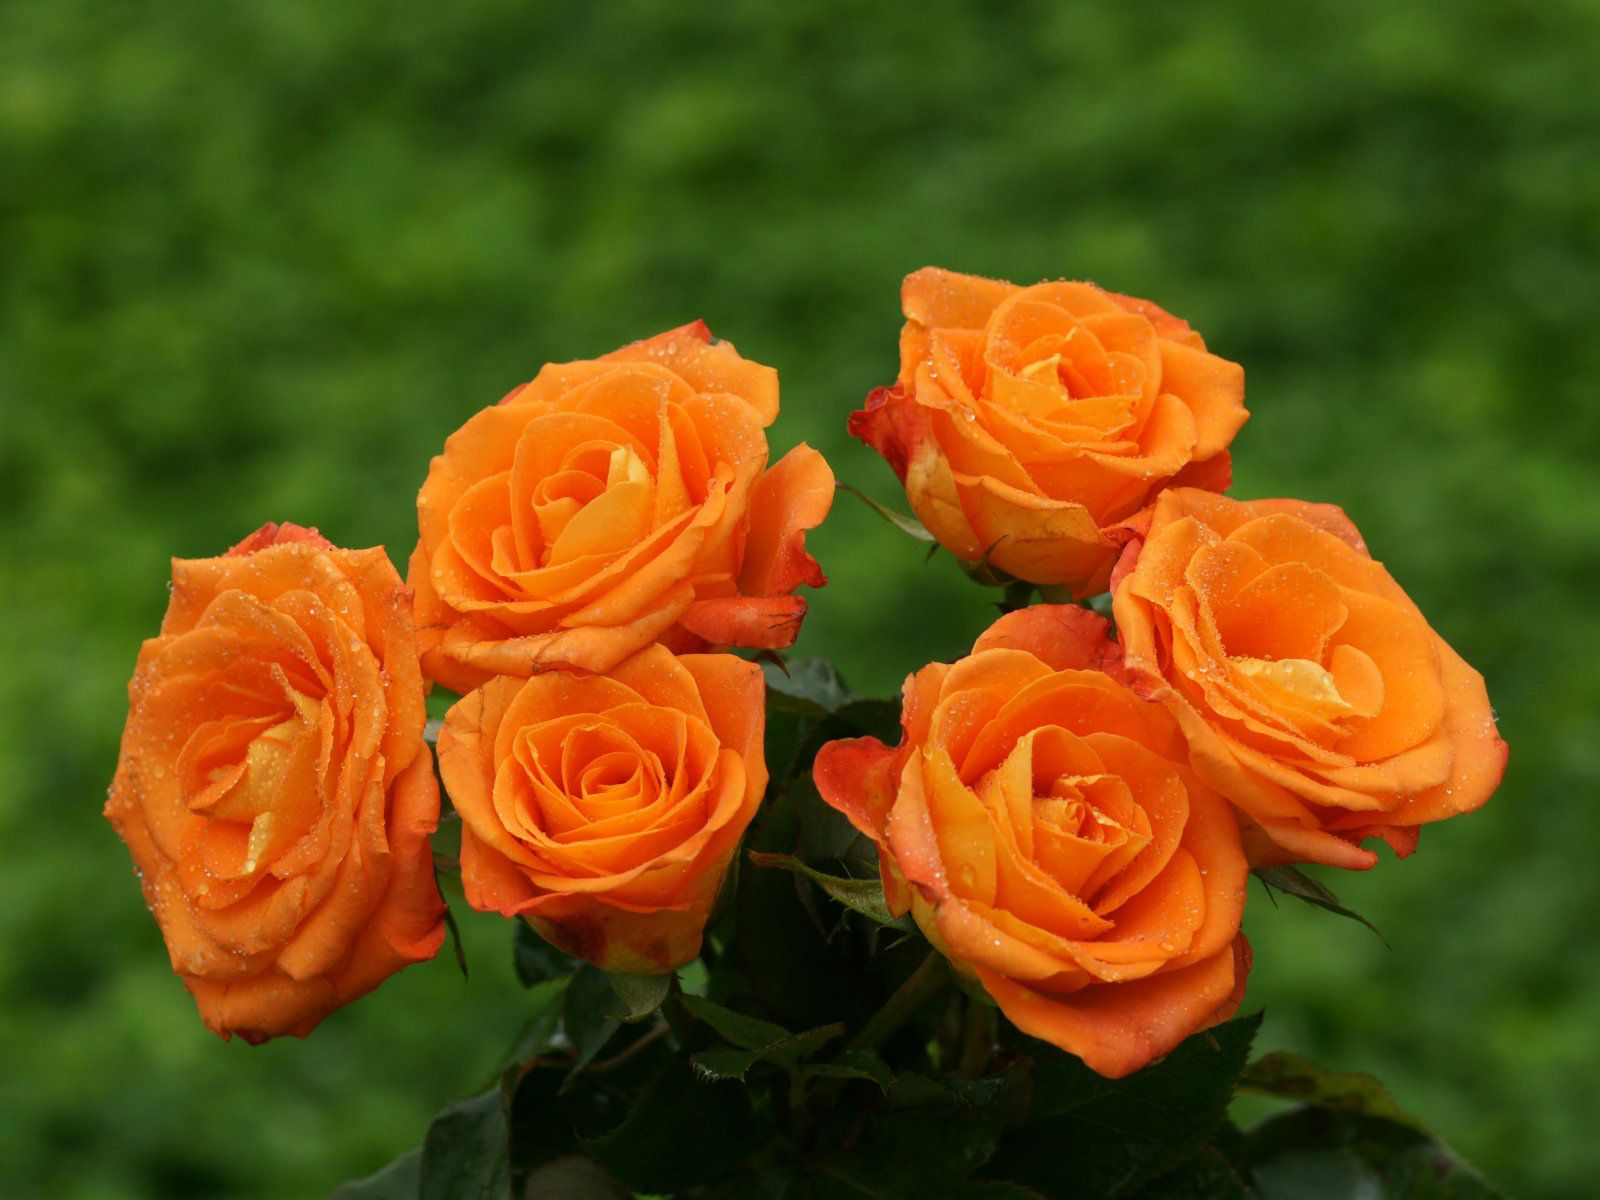 Most-Beautiful-Orange-Roses-HD-Wallpaper.jpg (1600×1200) | Flower ...